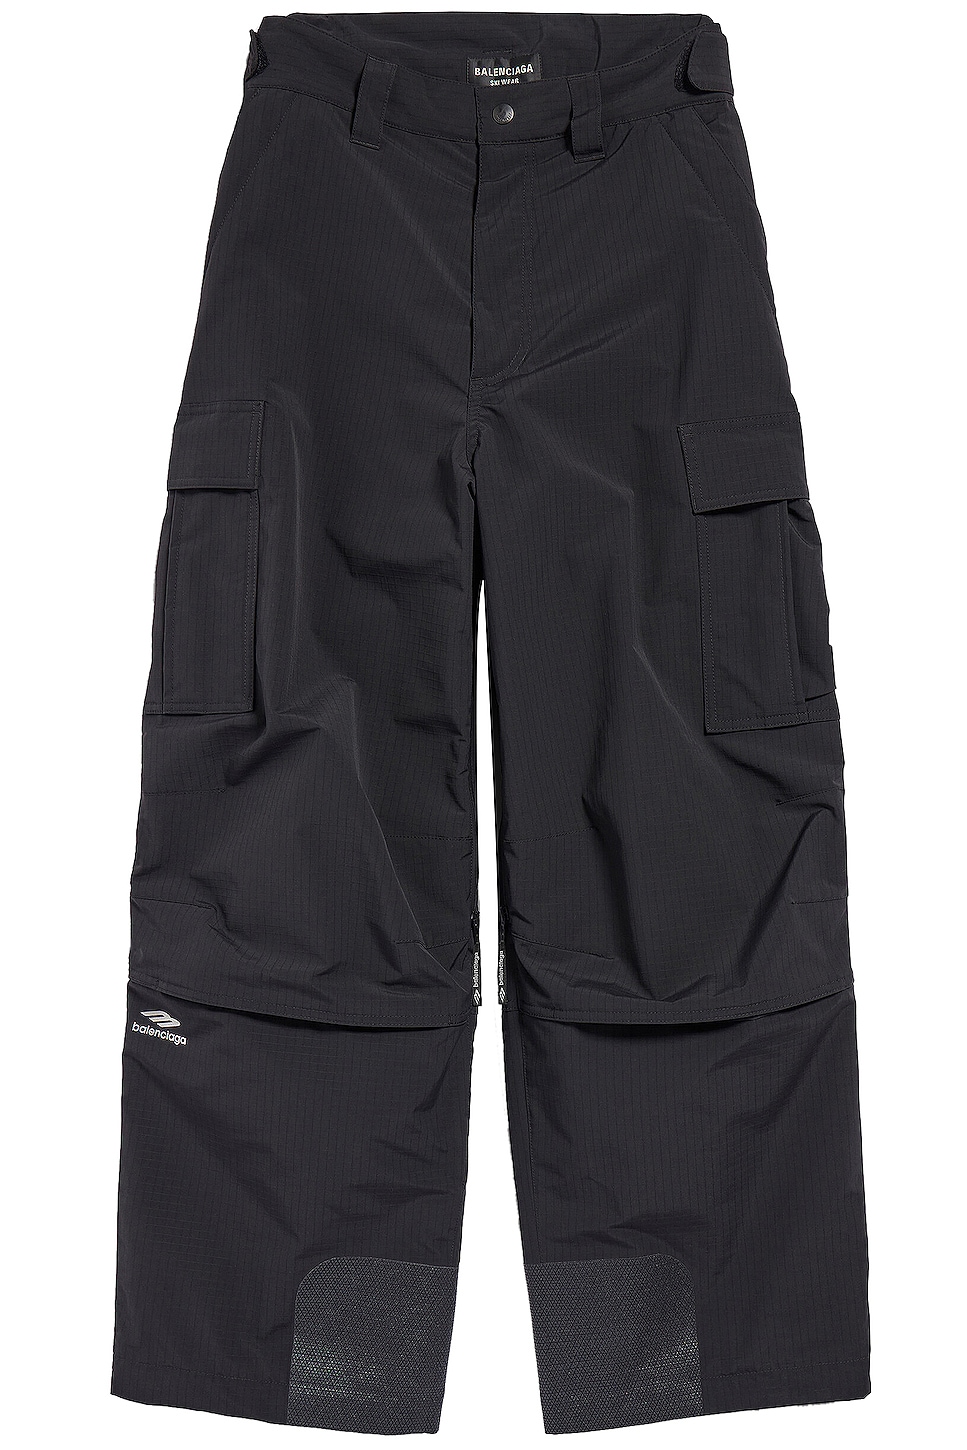 Image 1 of Balenciaga Ski Cargo Pant in Black